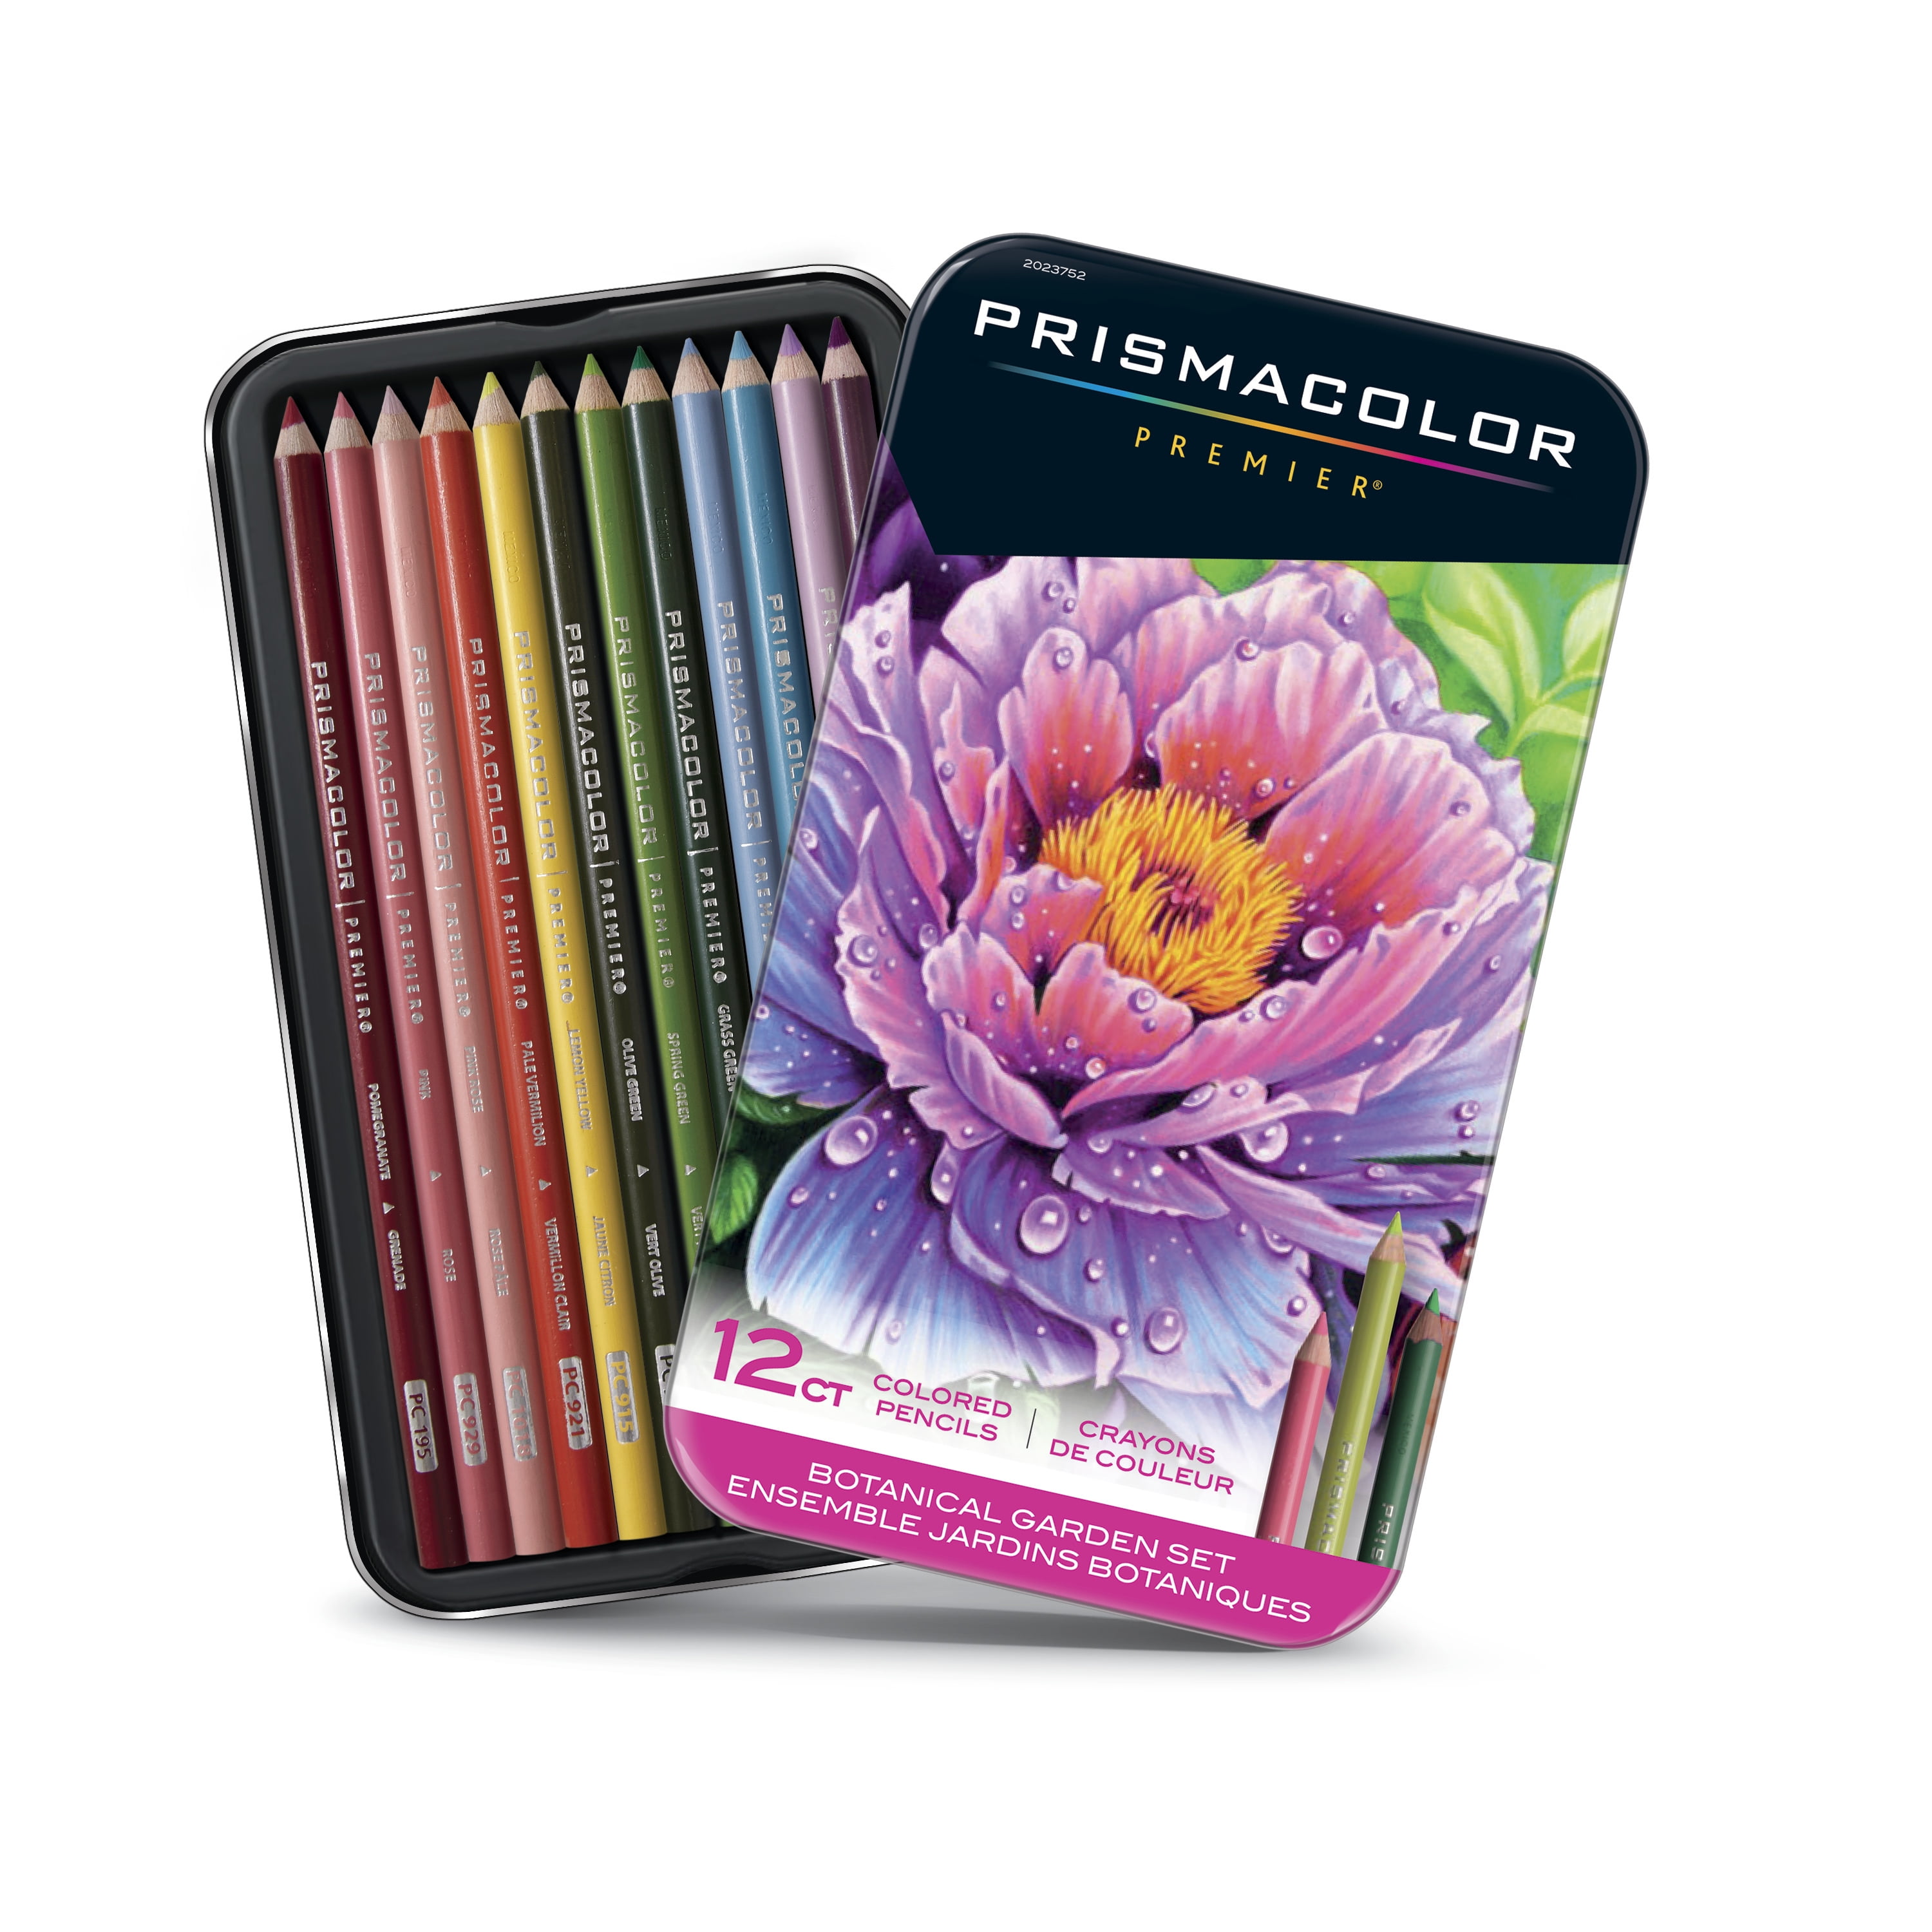 Prismacolor Premier Watercolor Pencils, Set of 12 Assorted Colors New In  Box